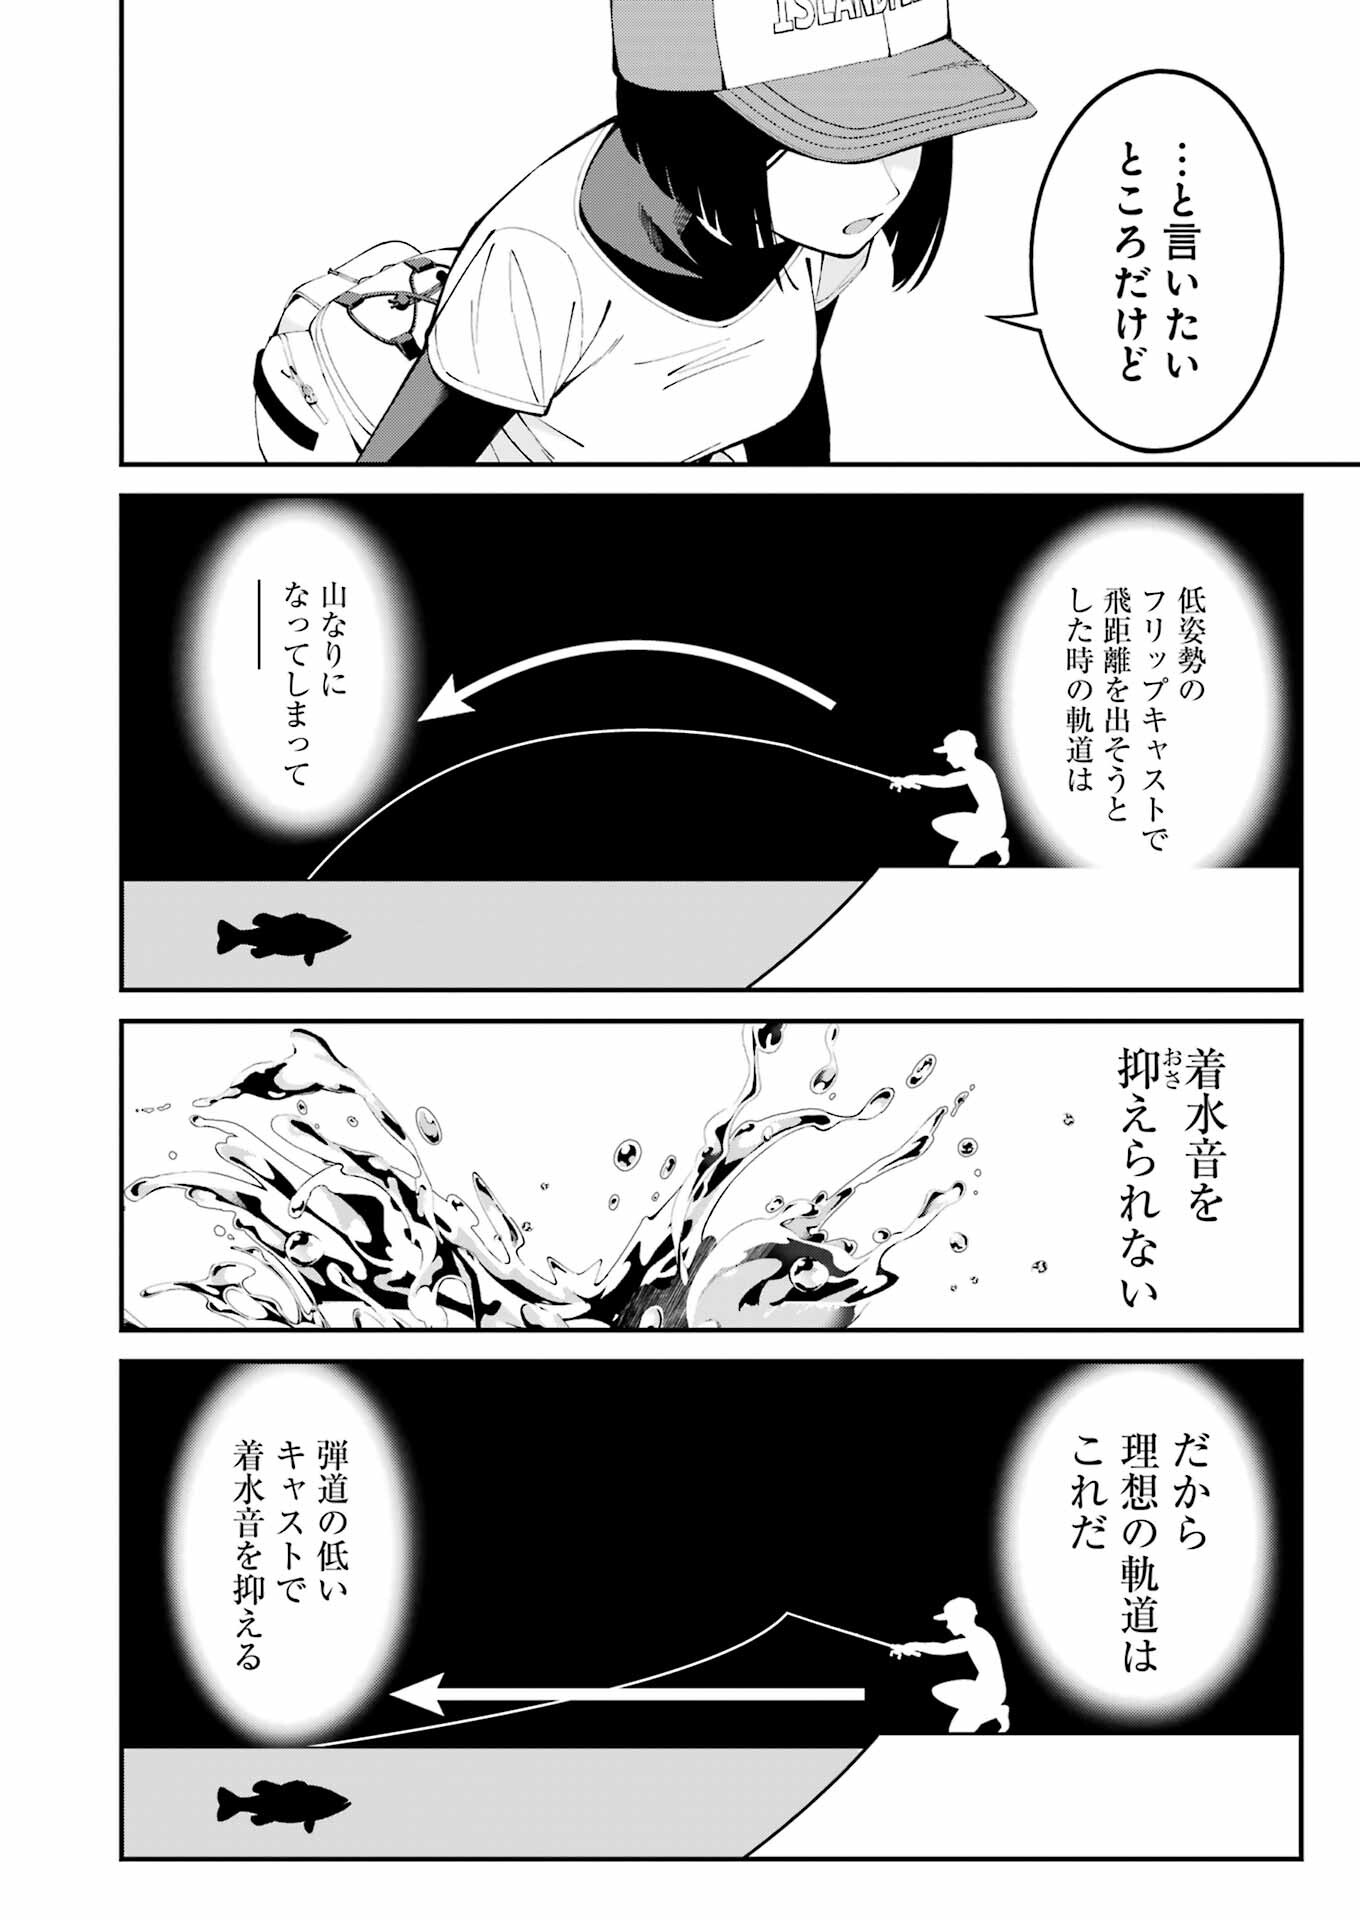 Tsuri Komachi - Chapter 54 - Page 12